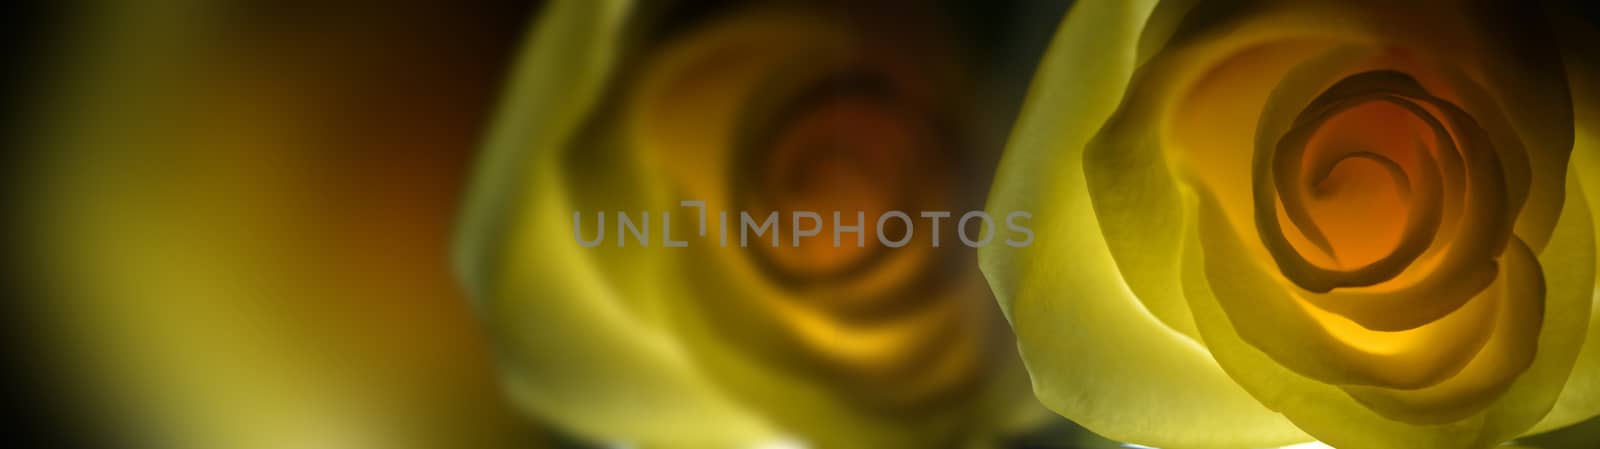 Yellow Roses by stellar